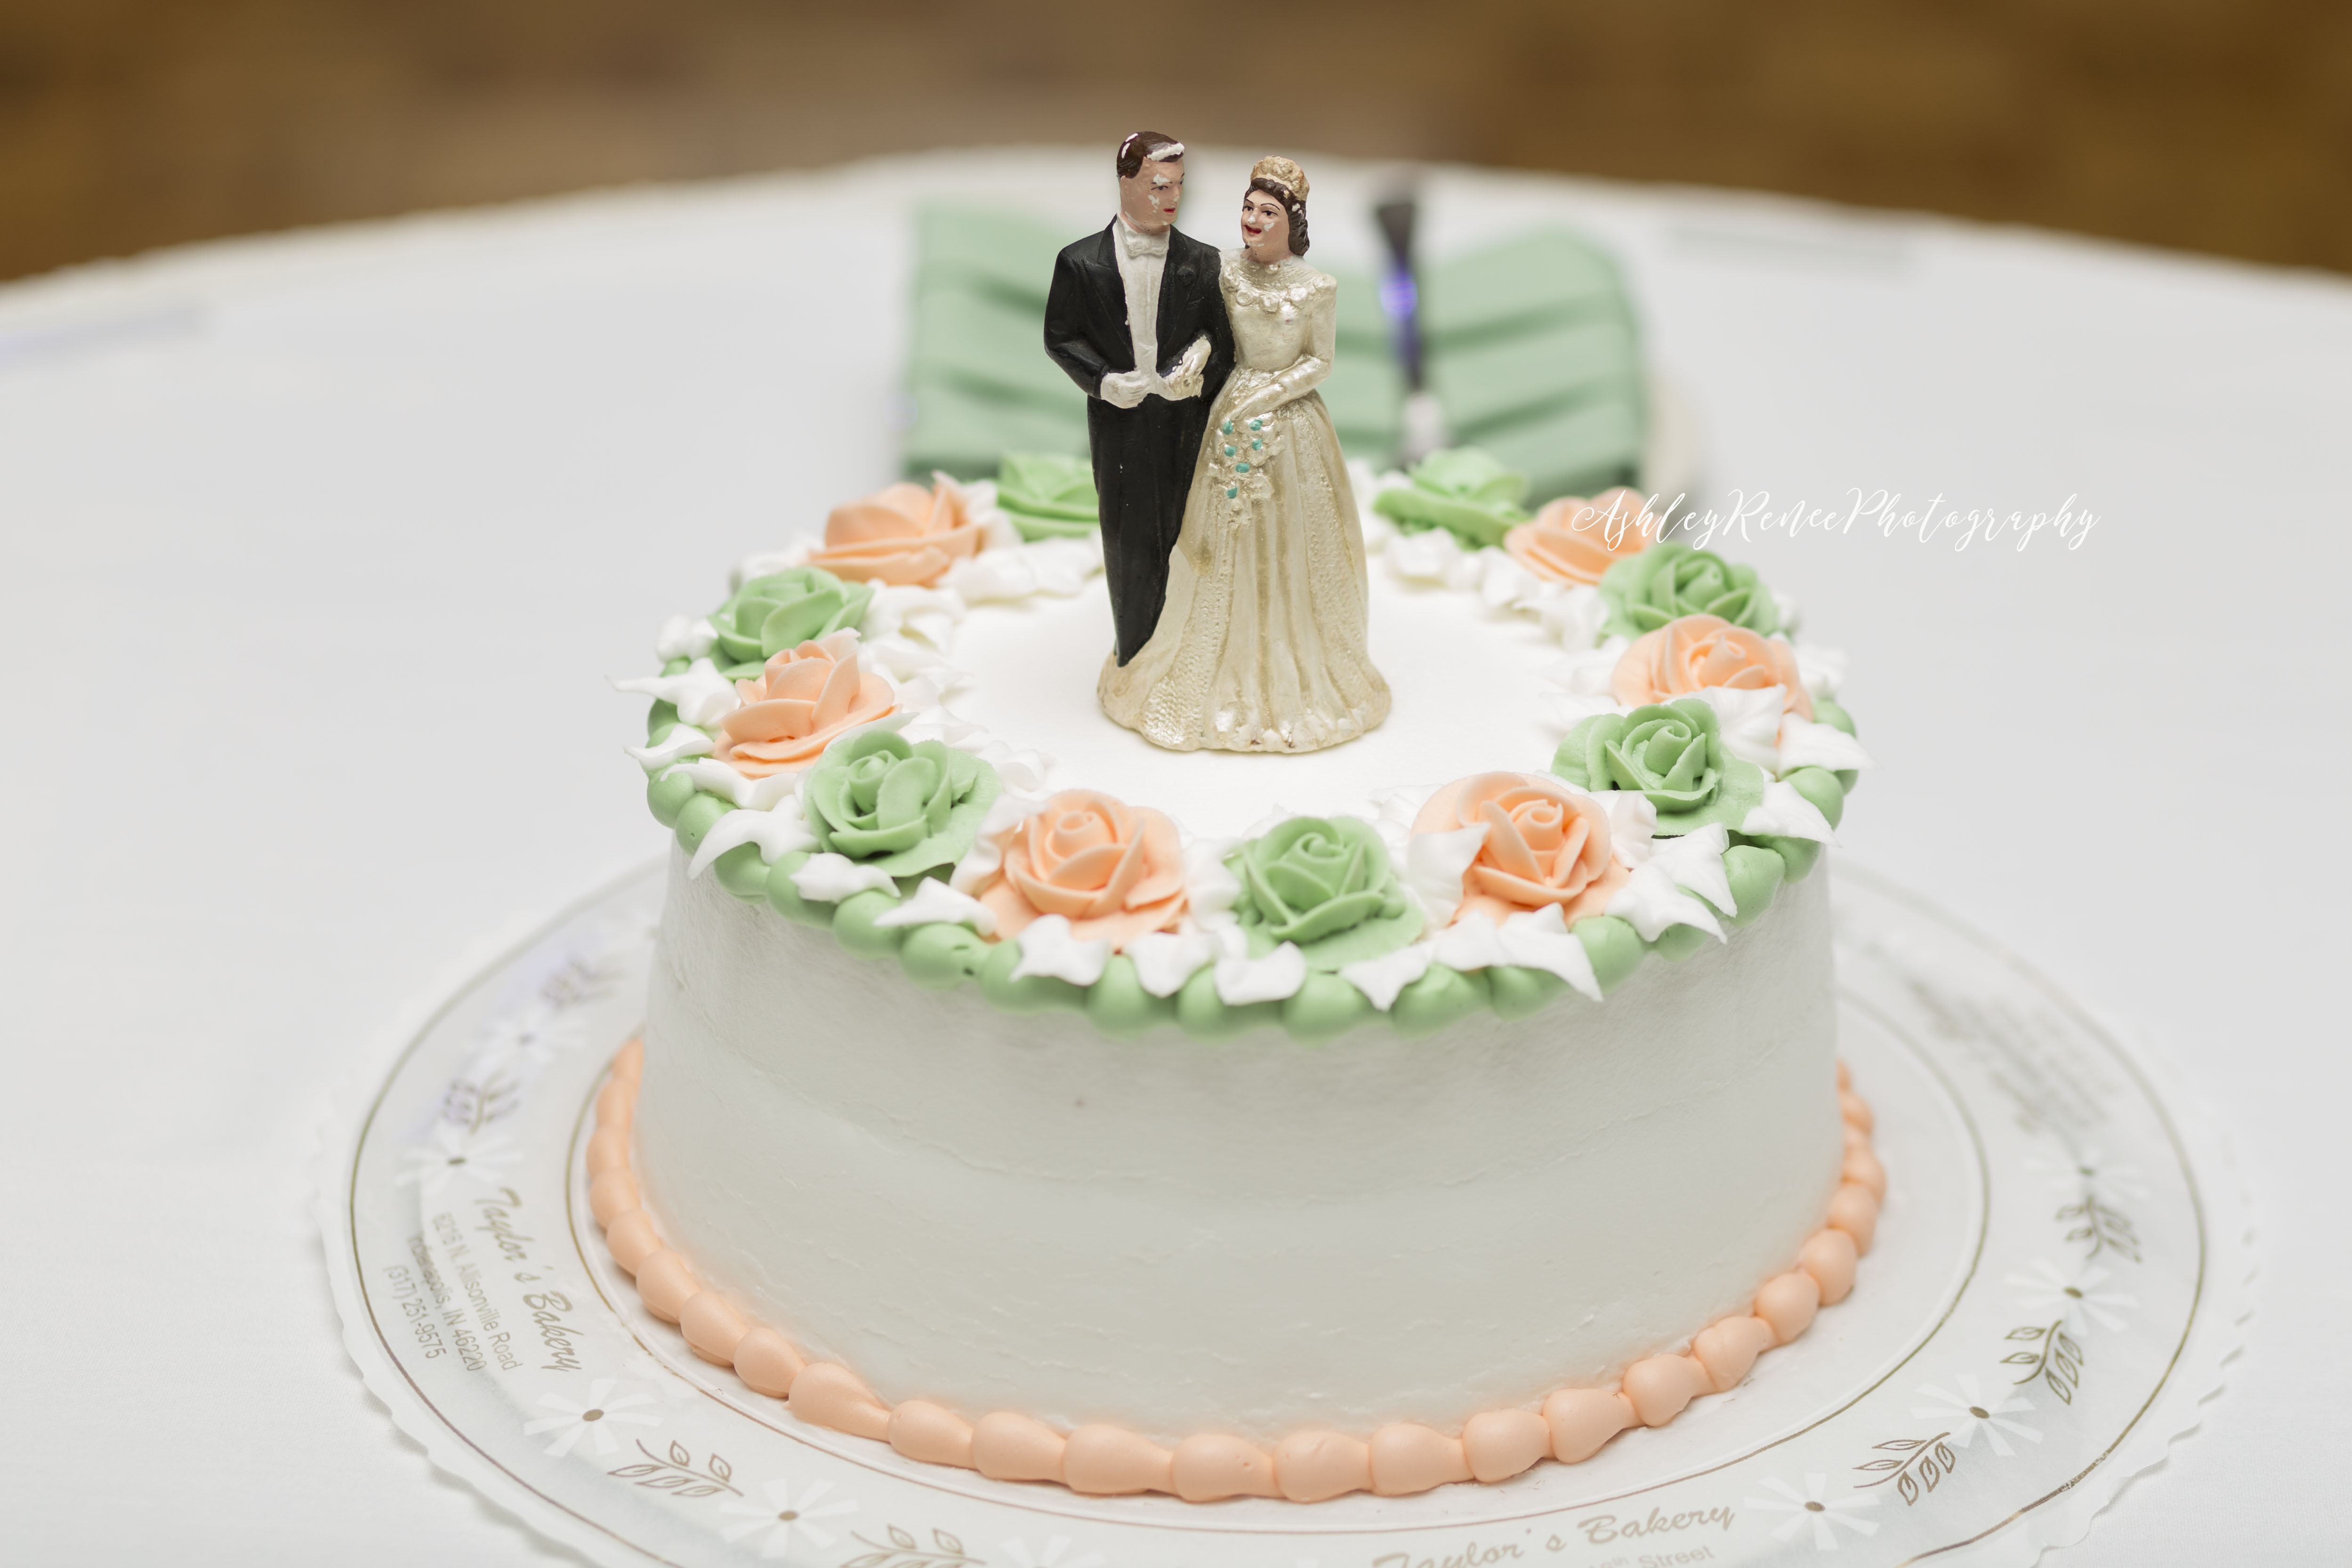 TheWillowsOnWestfieldweddingAshleyReneePhotography-weddingcake